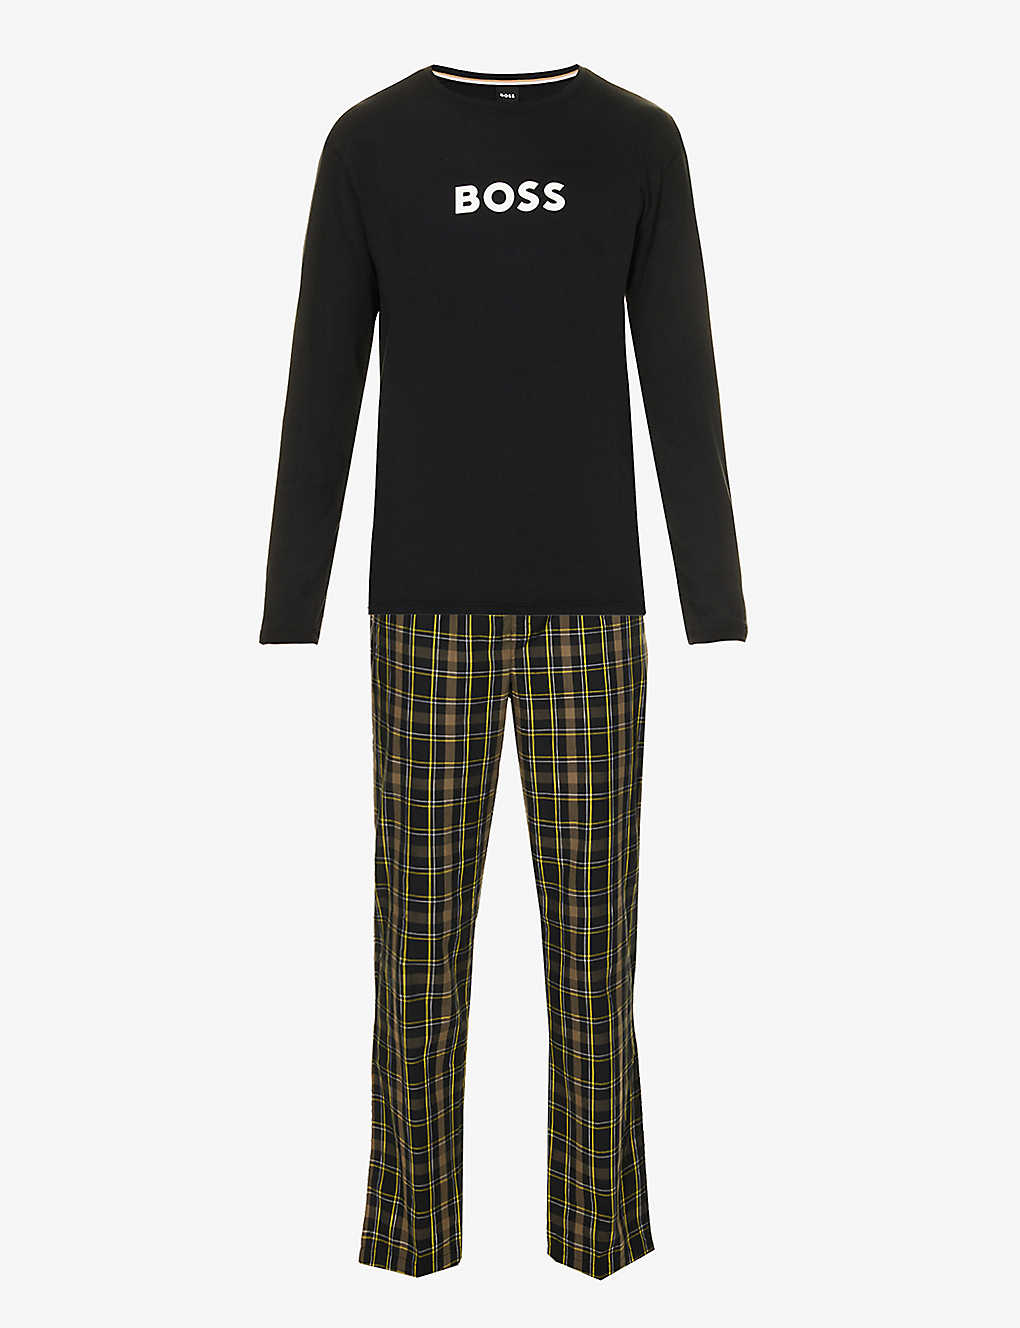 Hugo Boss Boss Mens Yellow Branded Long-sleeved Stretch-cotton Pyjamas